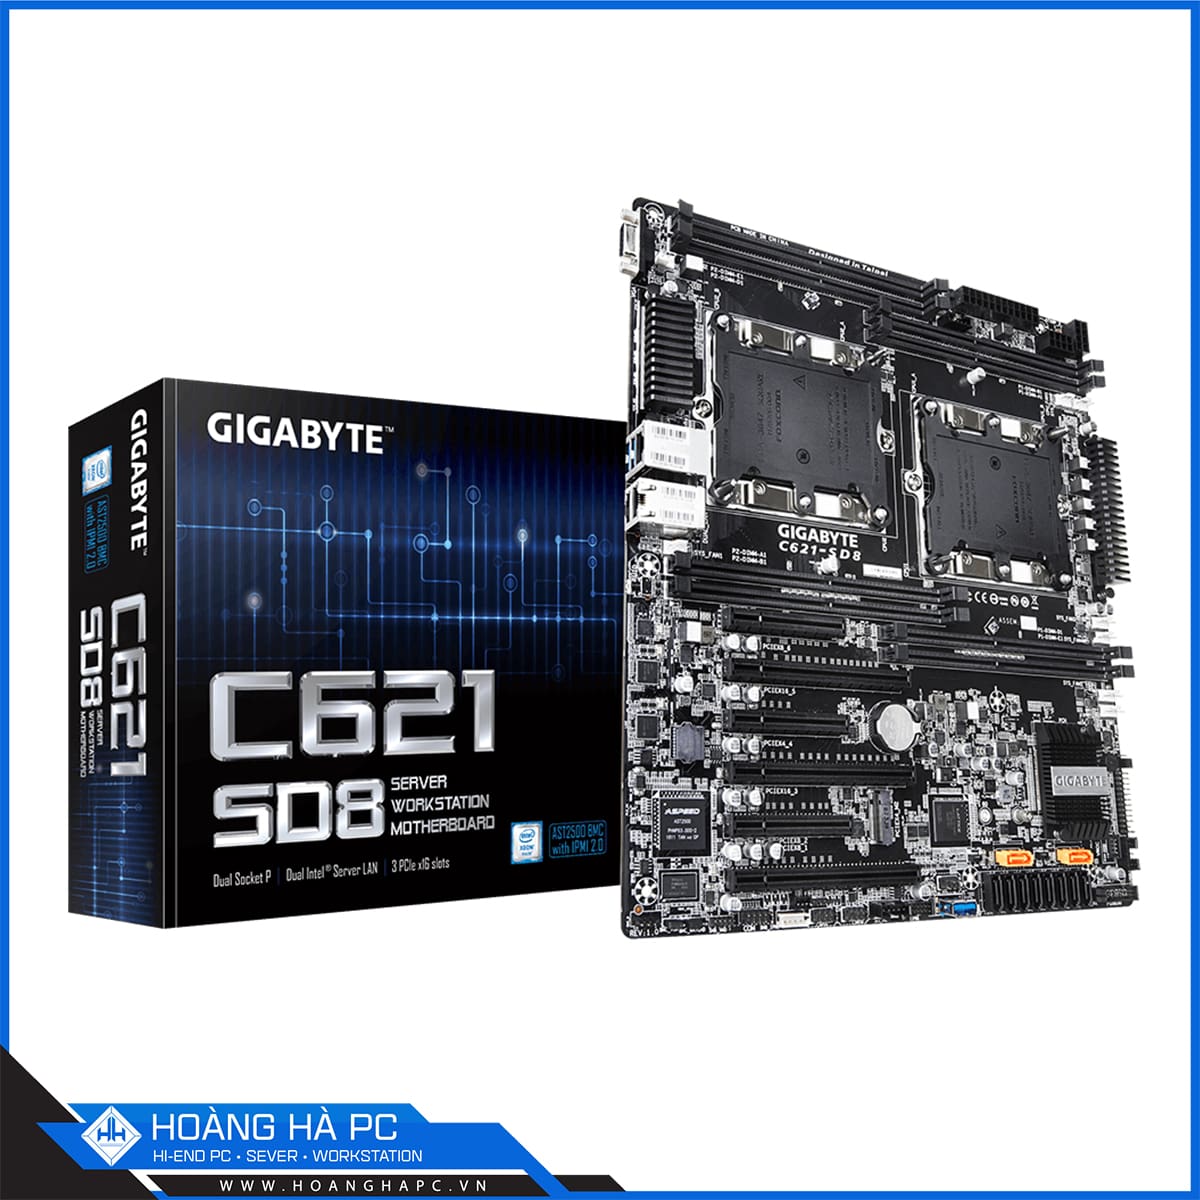 Mainboard GIGABYTE C621-SD8